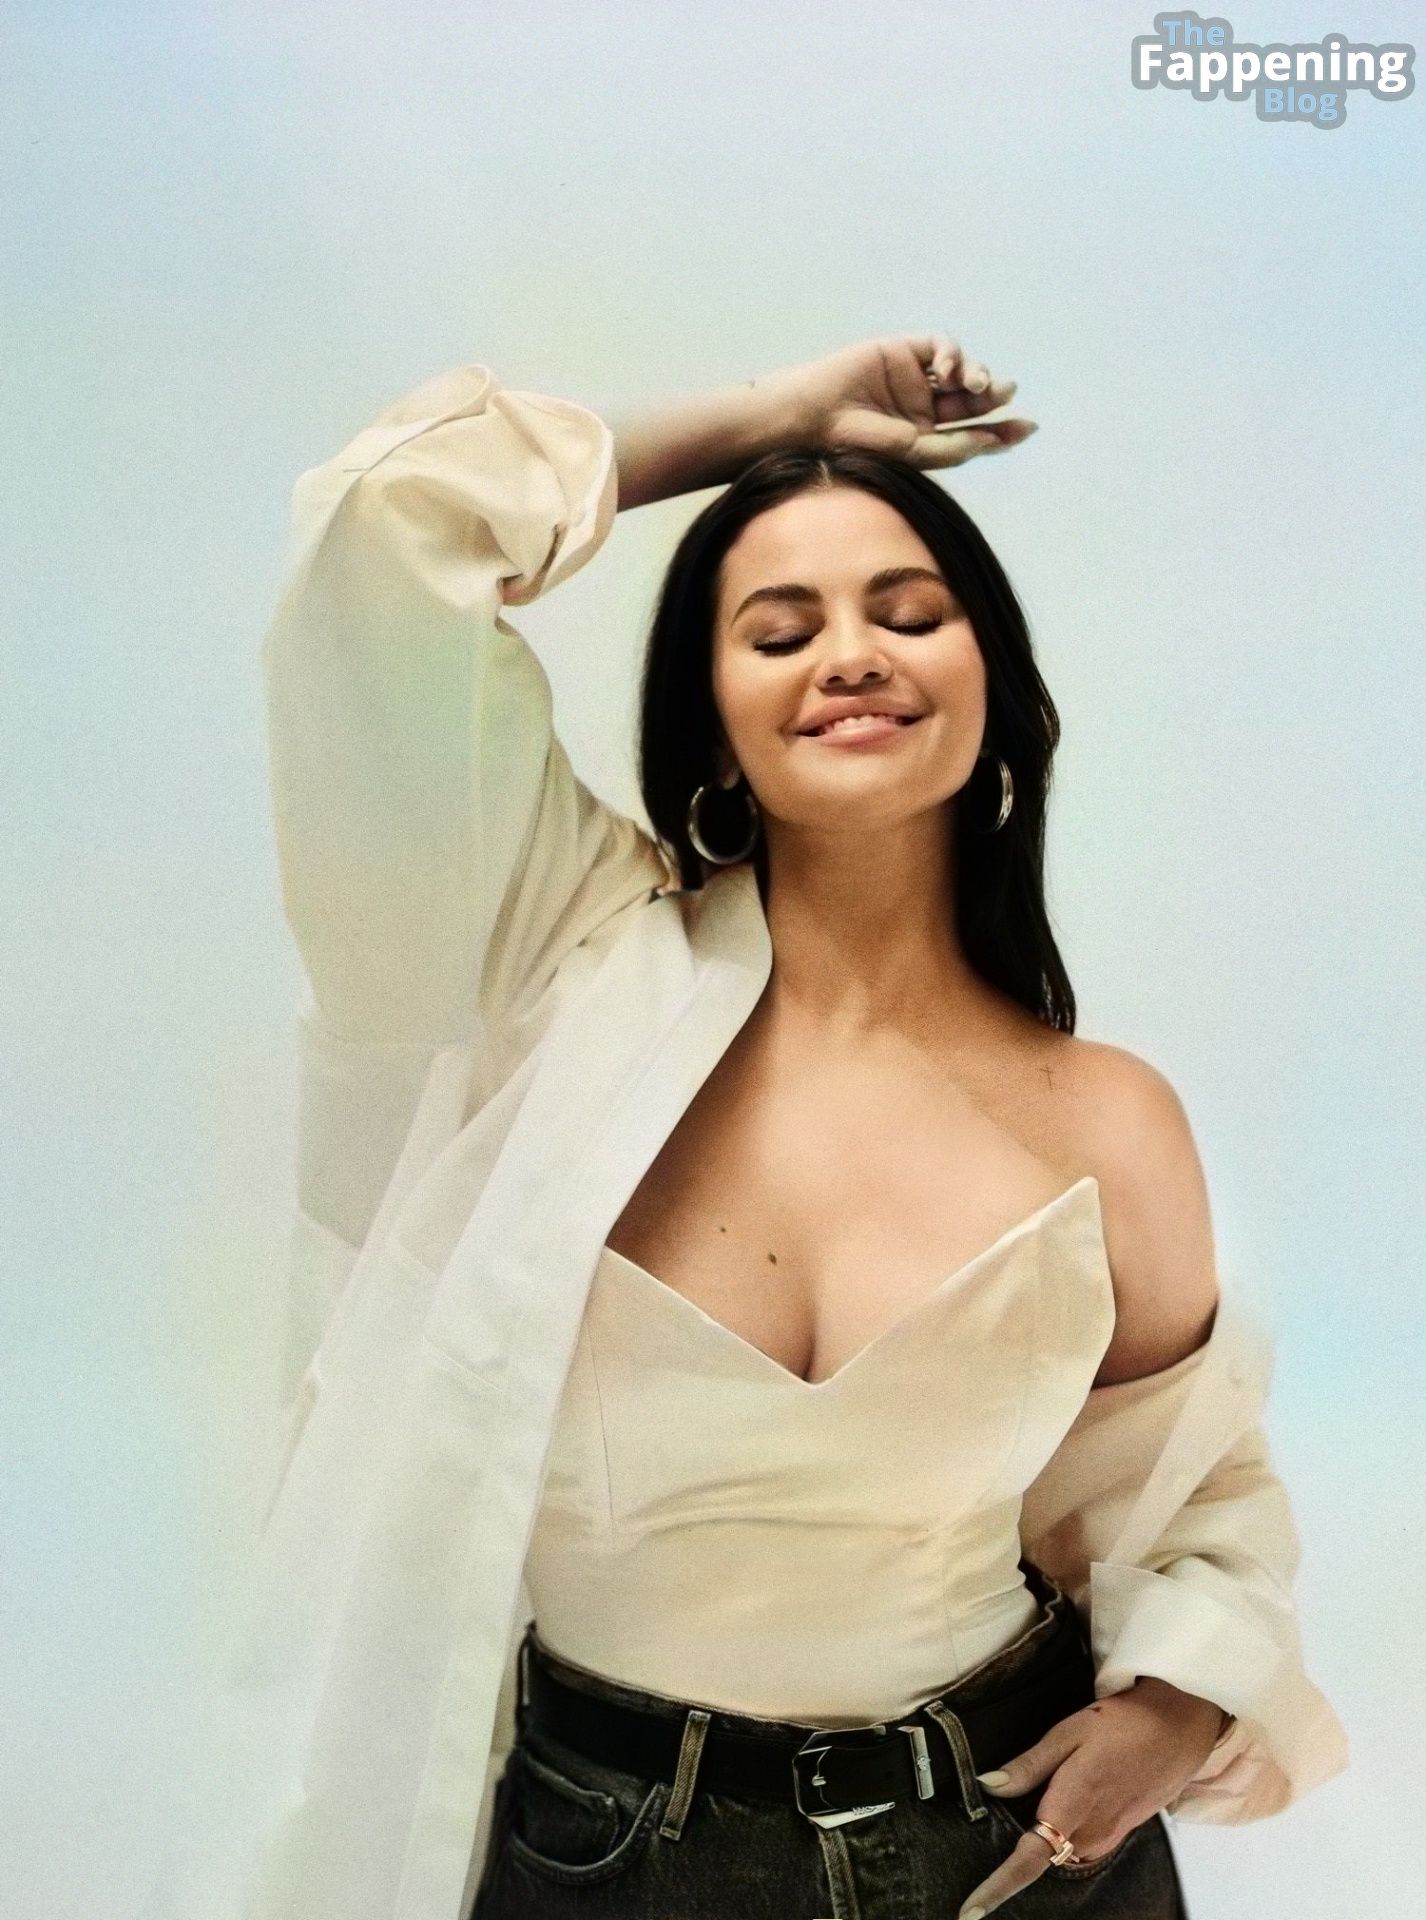 Selena-Gomez-Sexy-11-The-Fappening-Blog.jpg